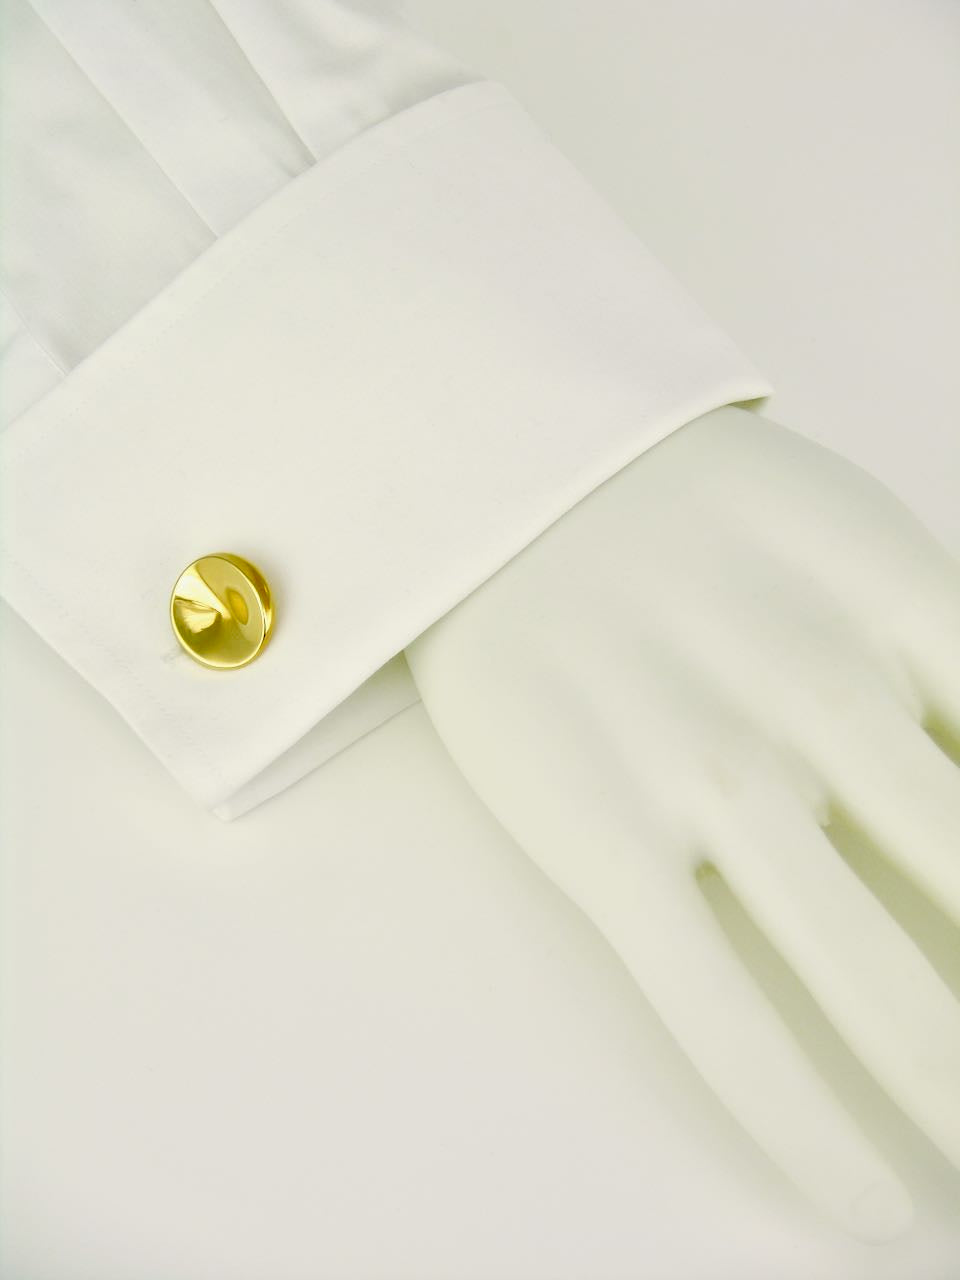 Vintage Georg Jensen 18k yellow gold cufflinks - design 1074C Nanna Ditzel